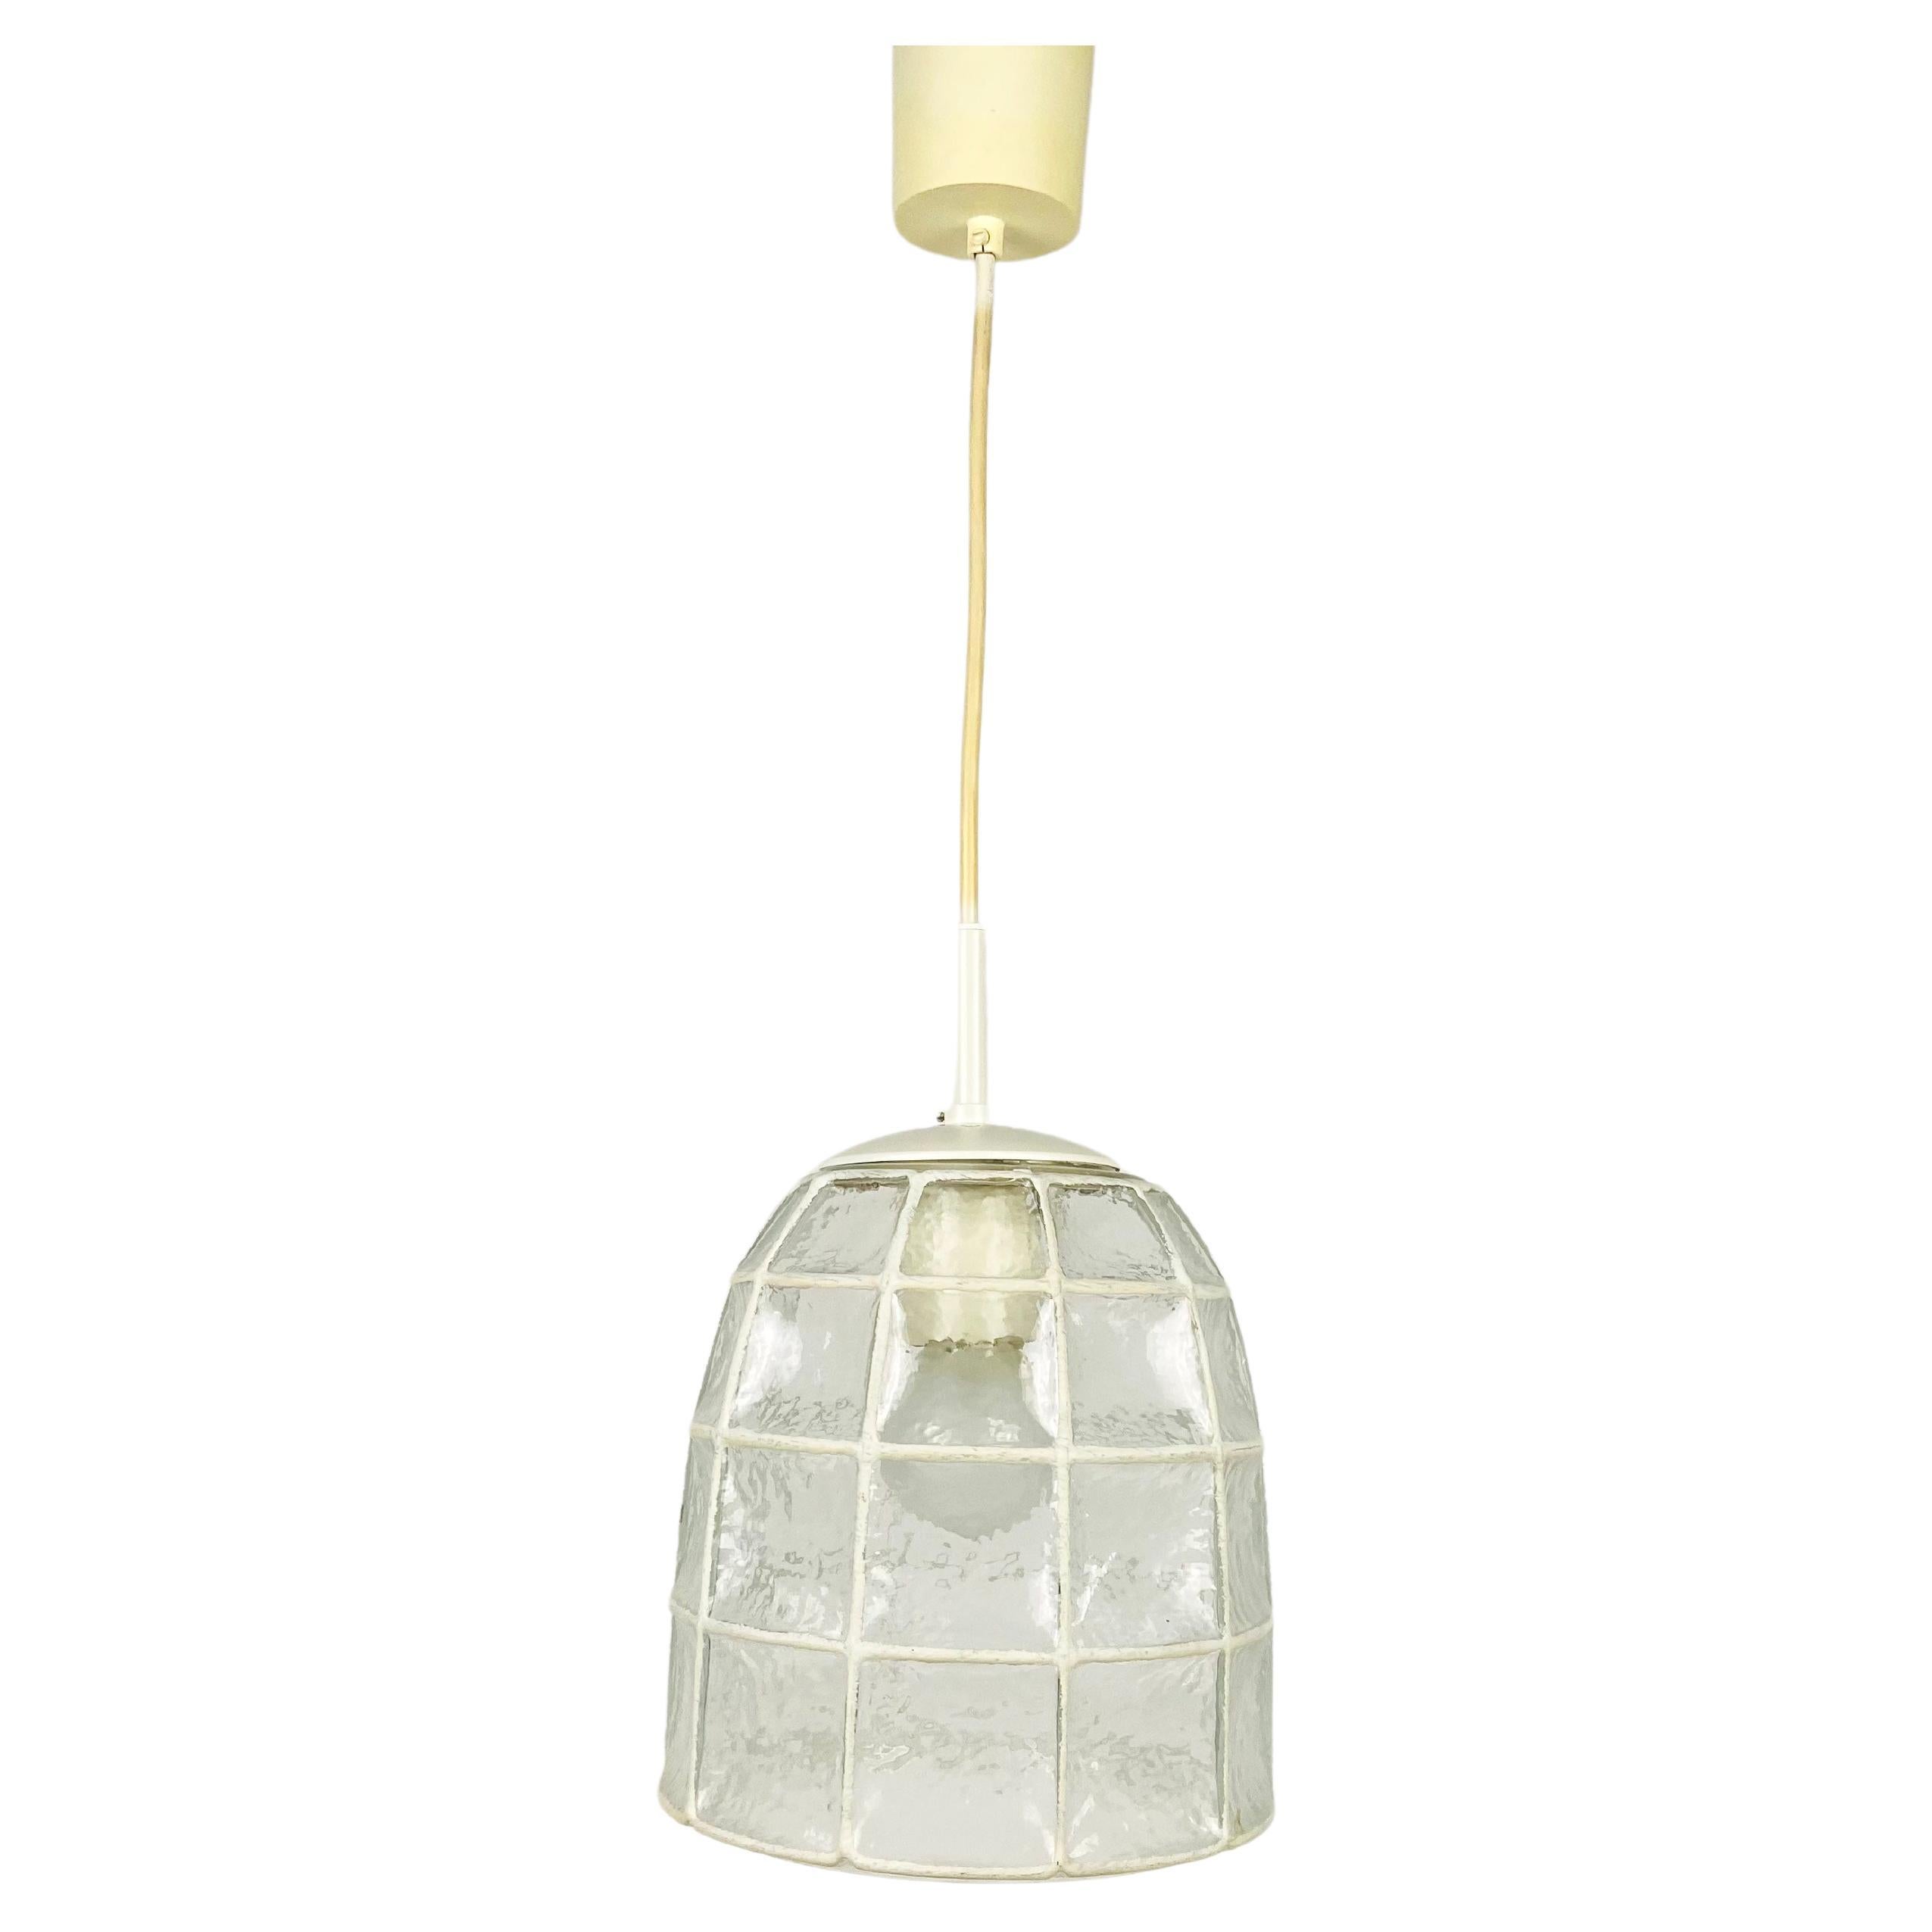 Midcentury Iron and Bubble Glass Pendant lamp by Glashütte Limburg, 1960s